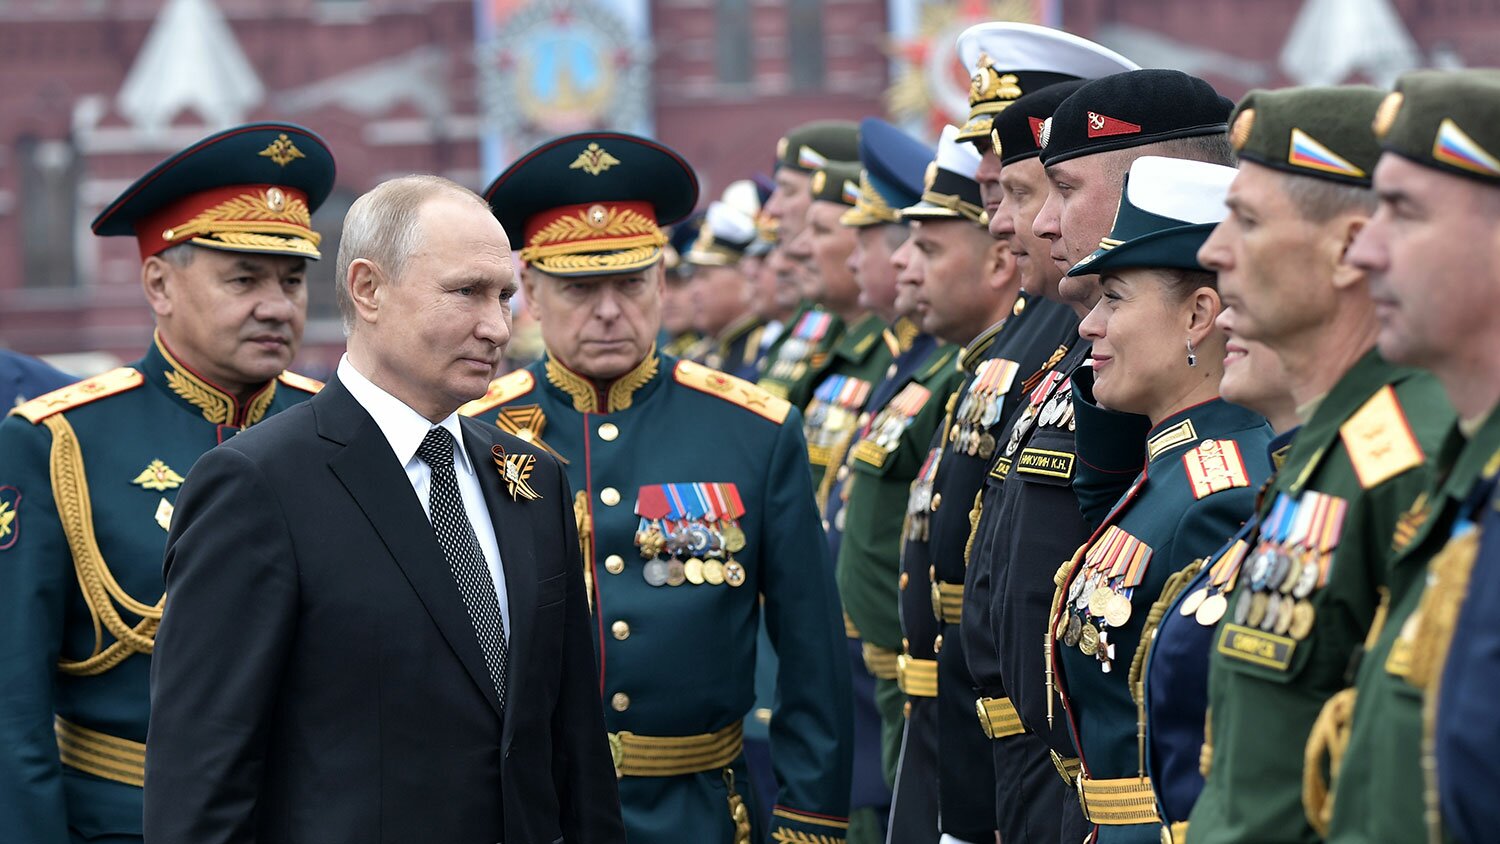 "Риски не дают мне права..." - Путин определил судьбу Парада Победы